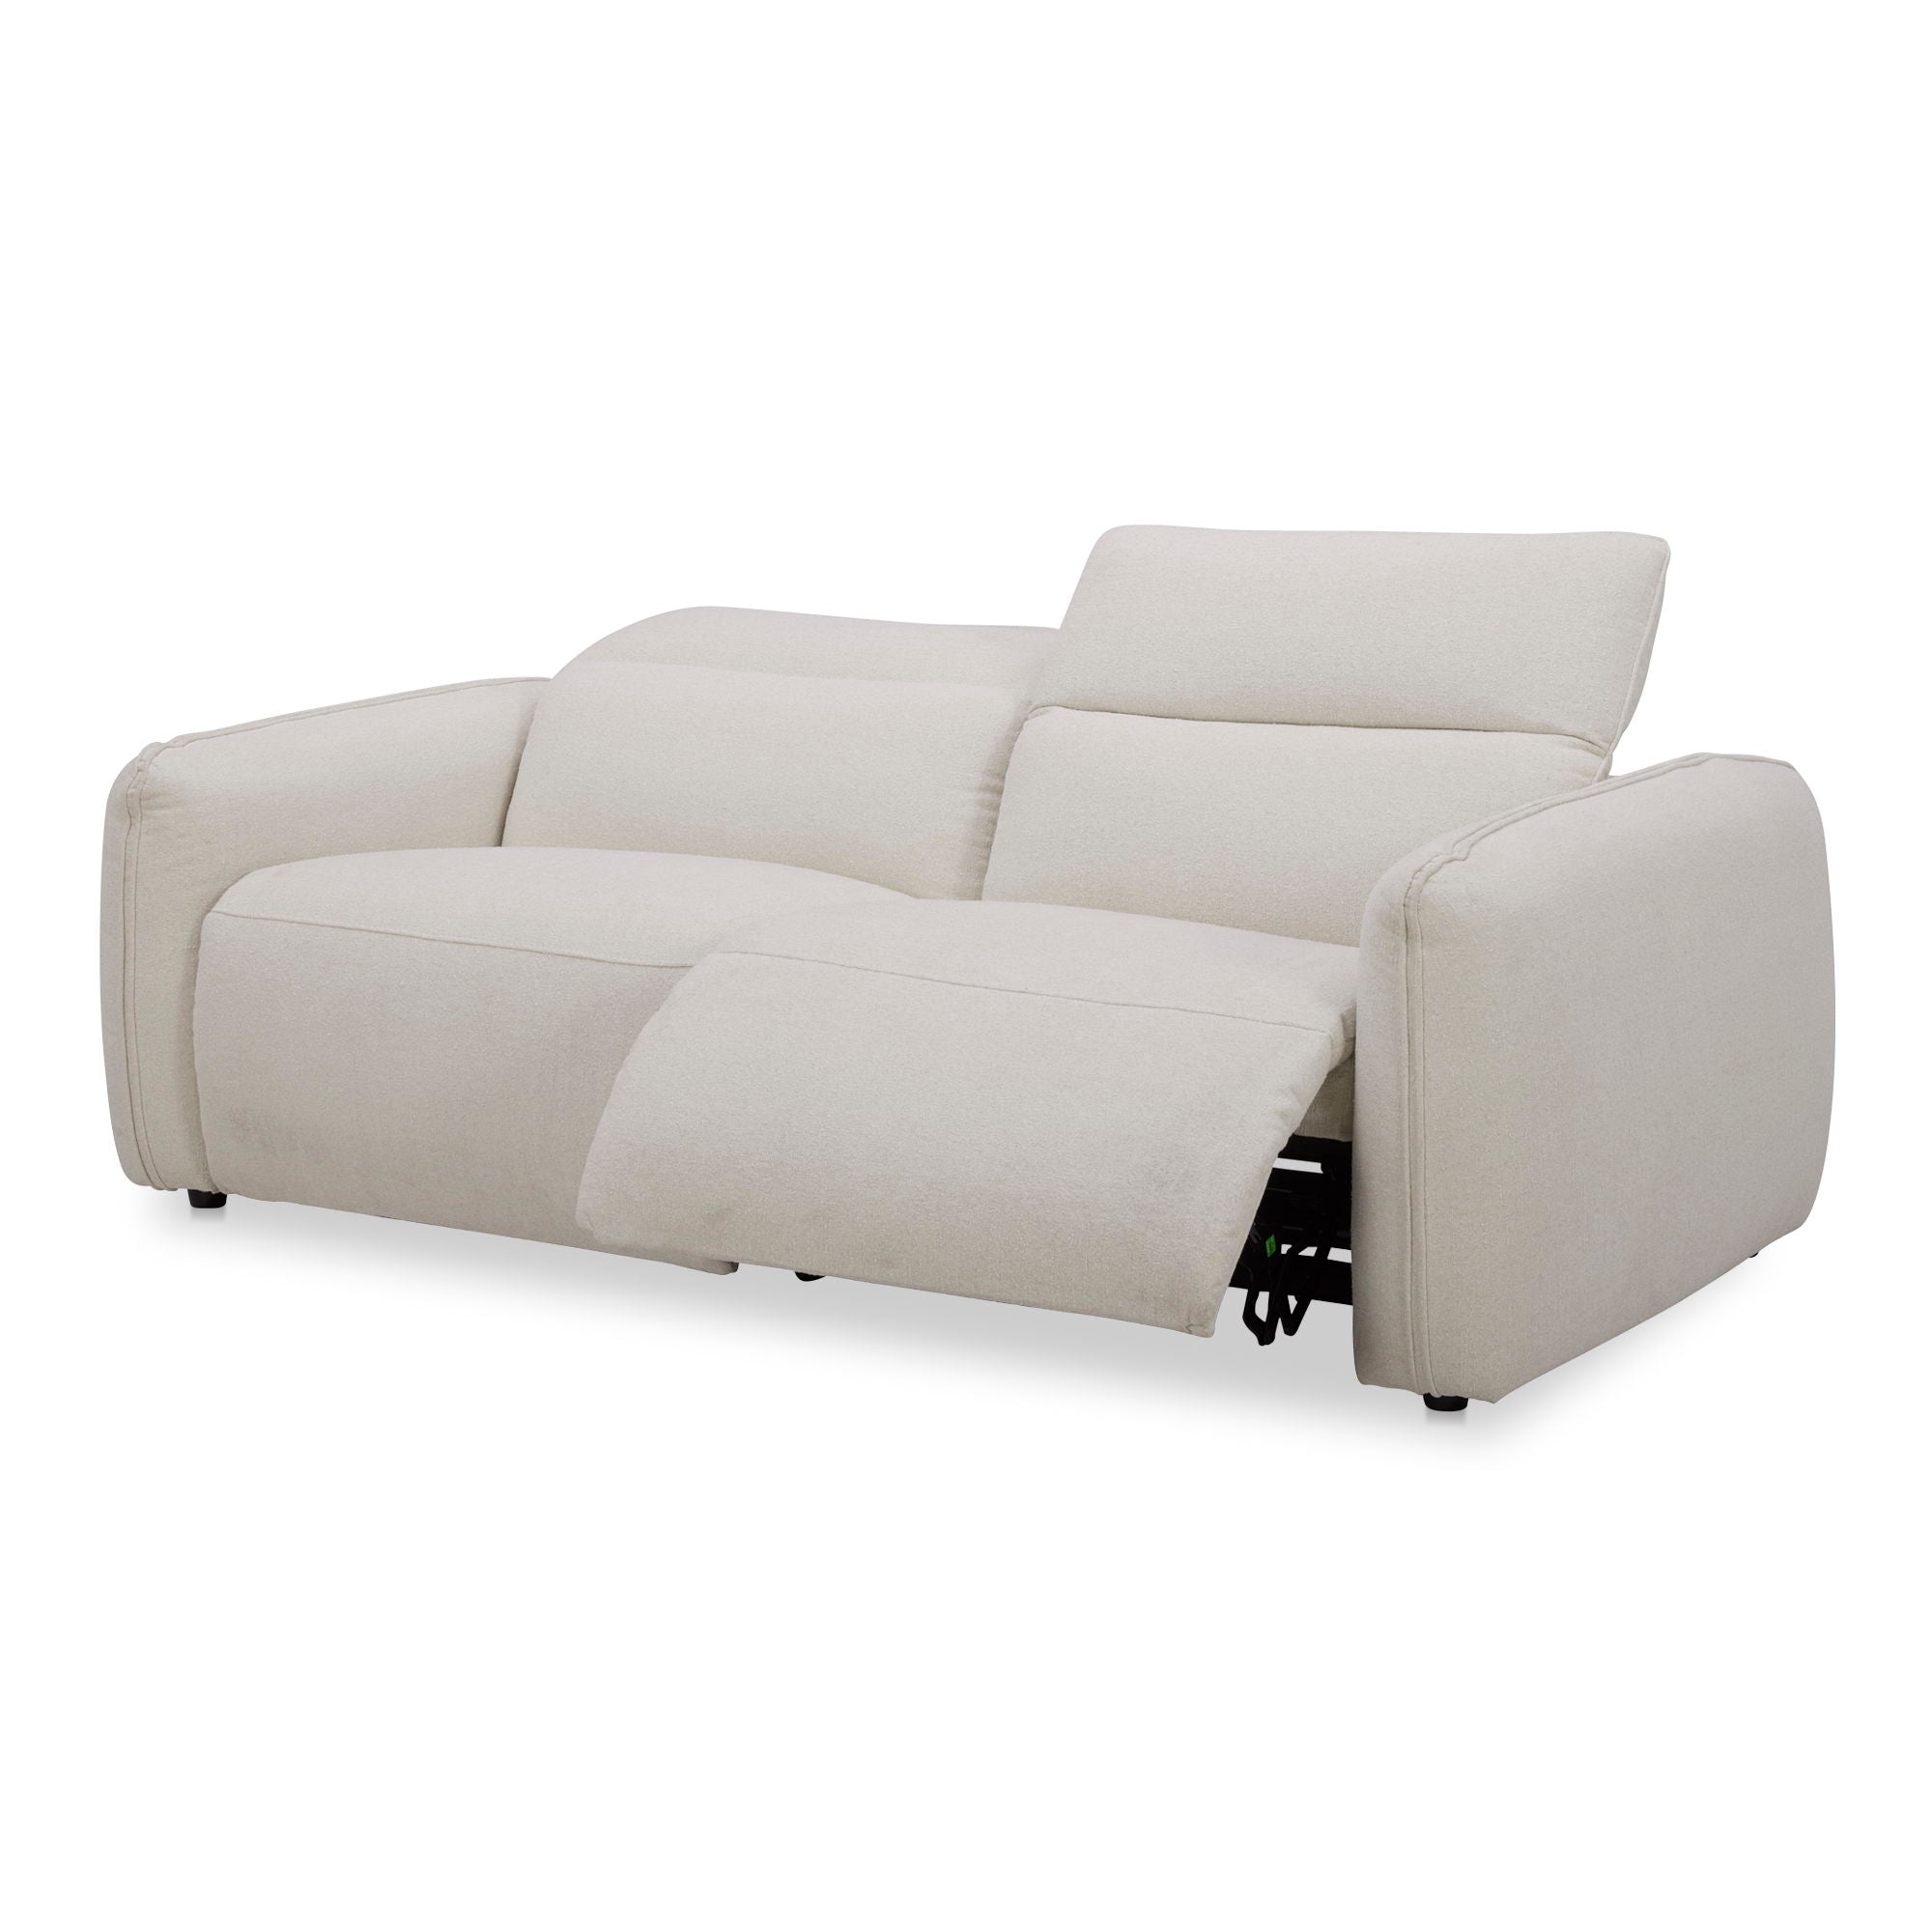 Eli - Power Recliner Sofa - White